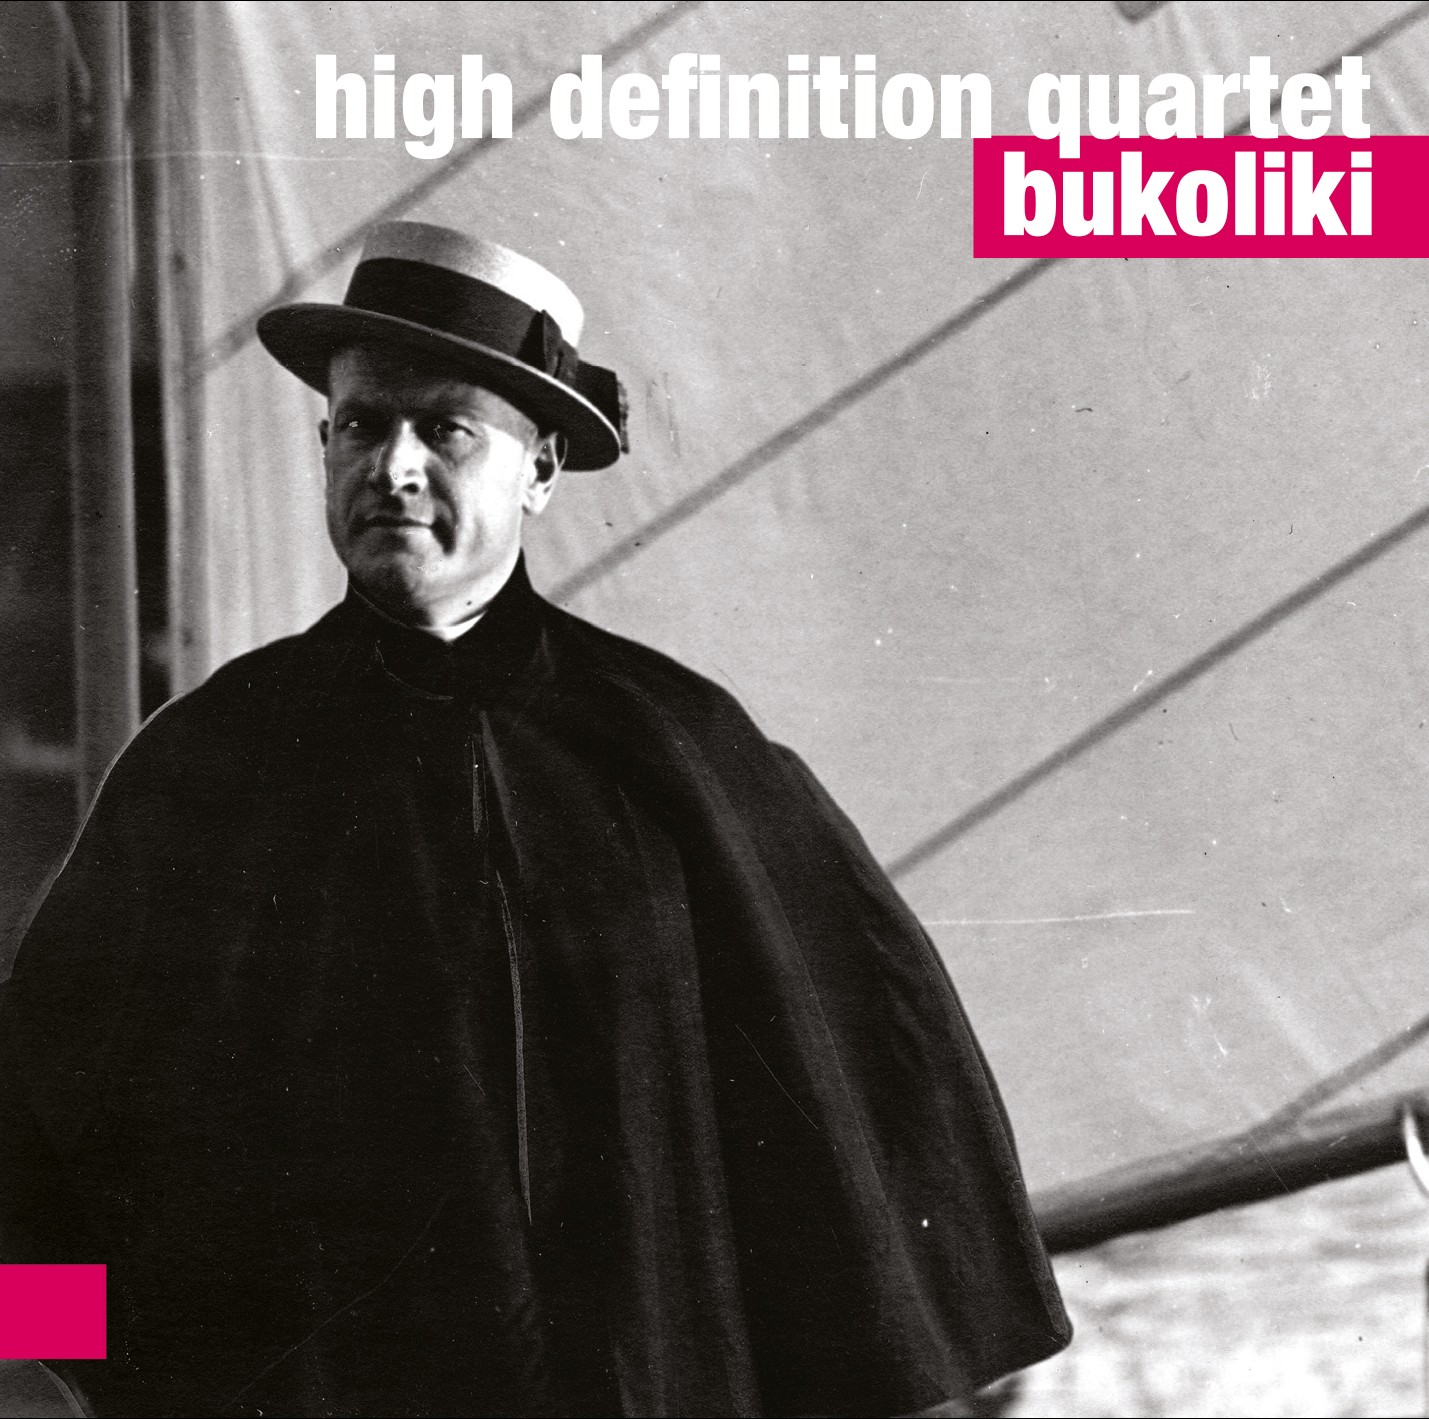 High Definition Quartet - Bukoliki